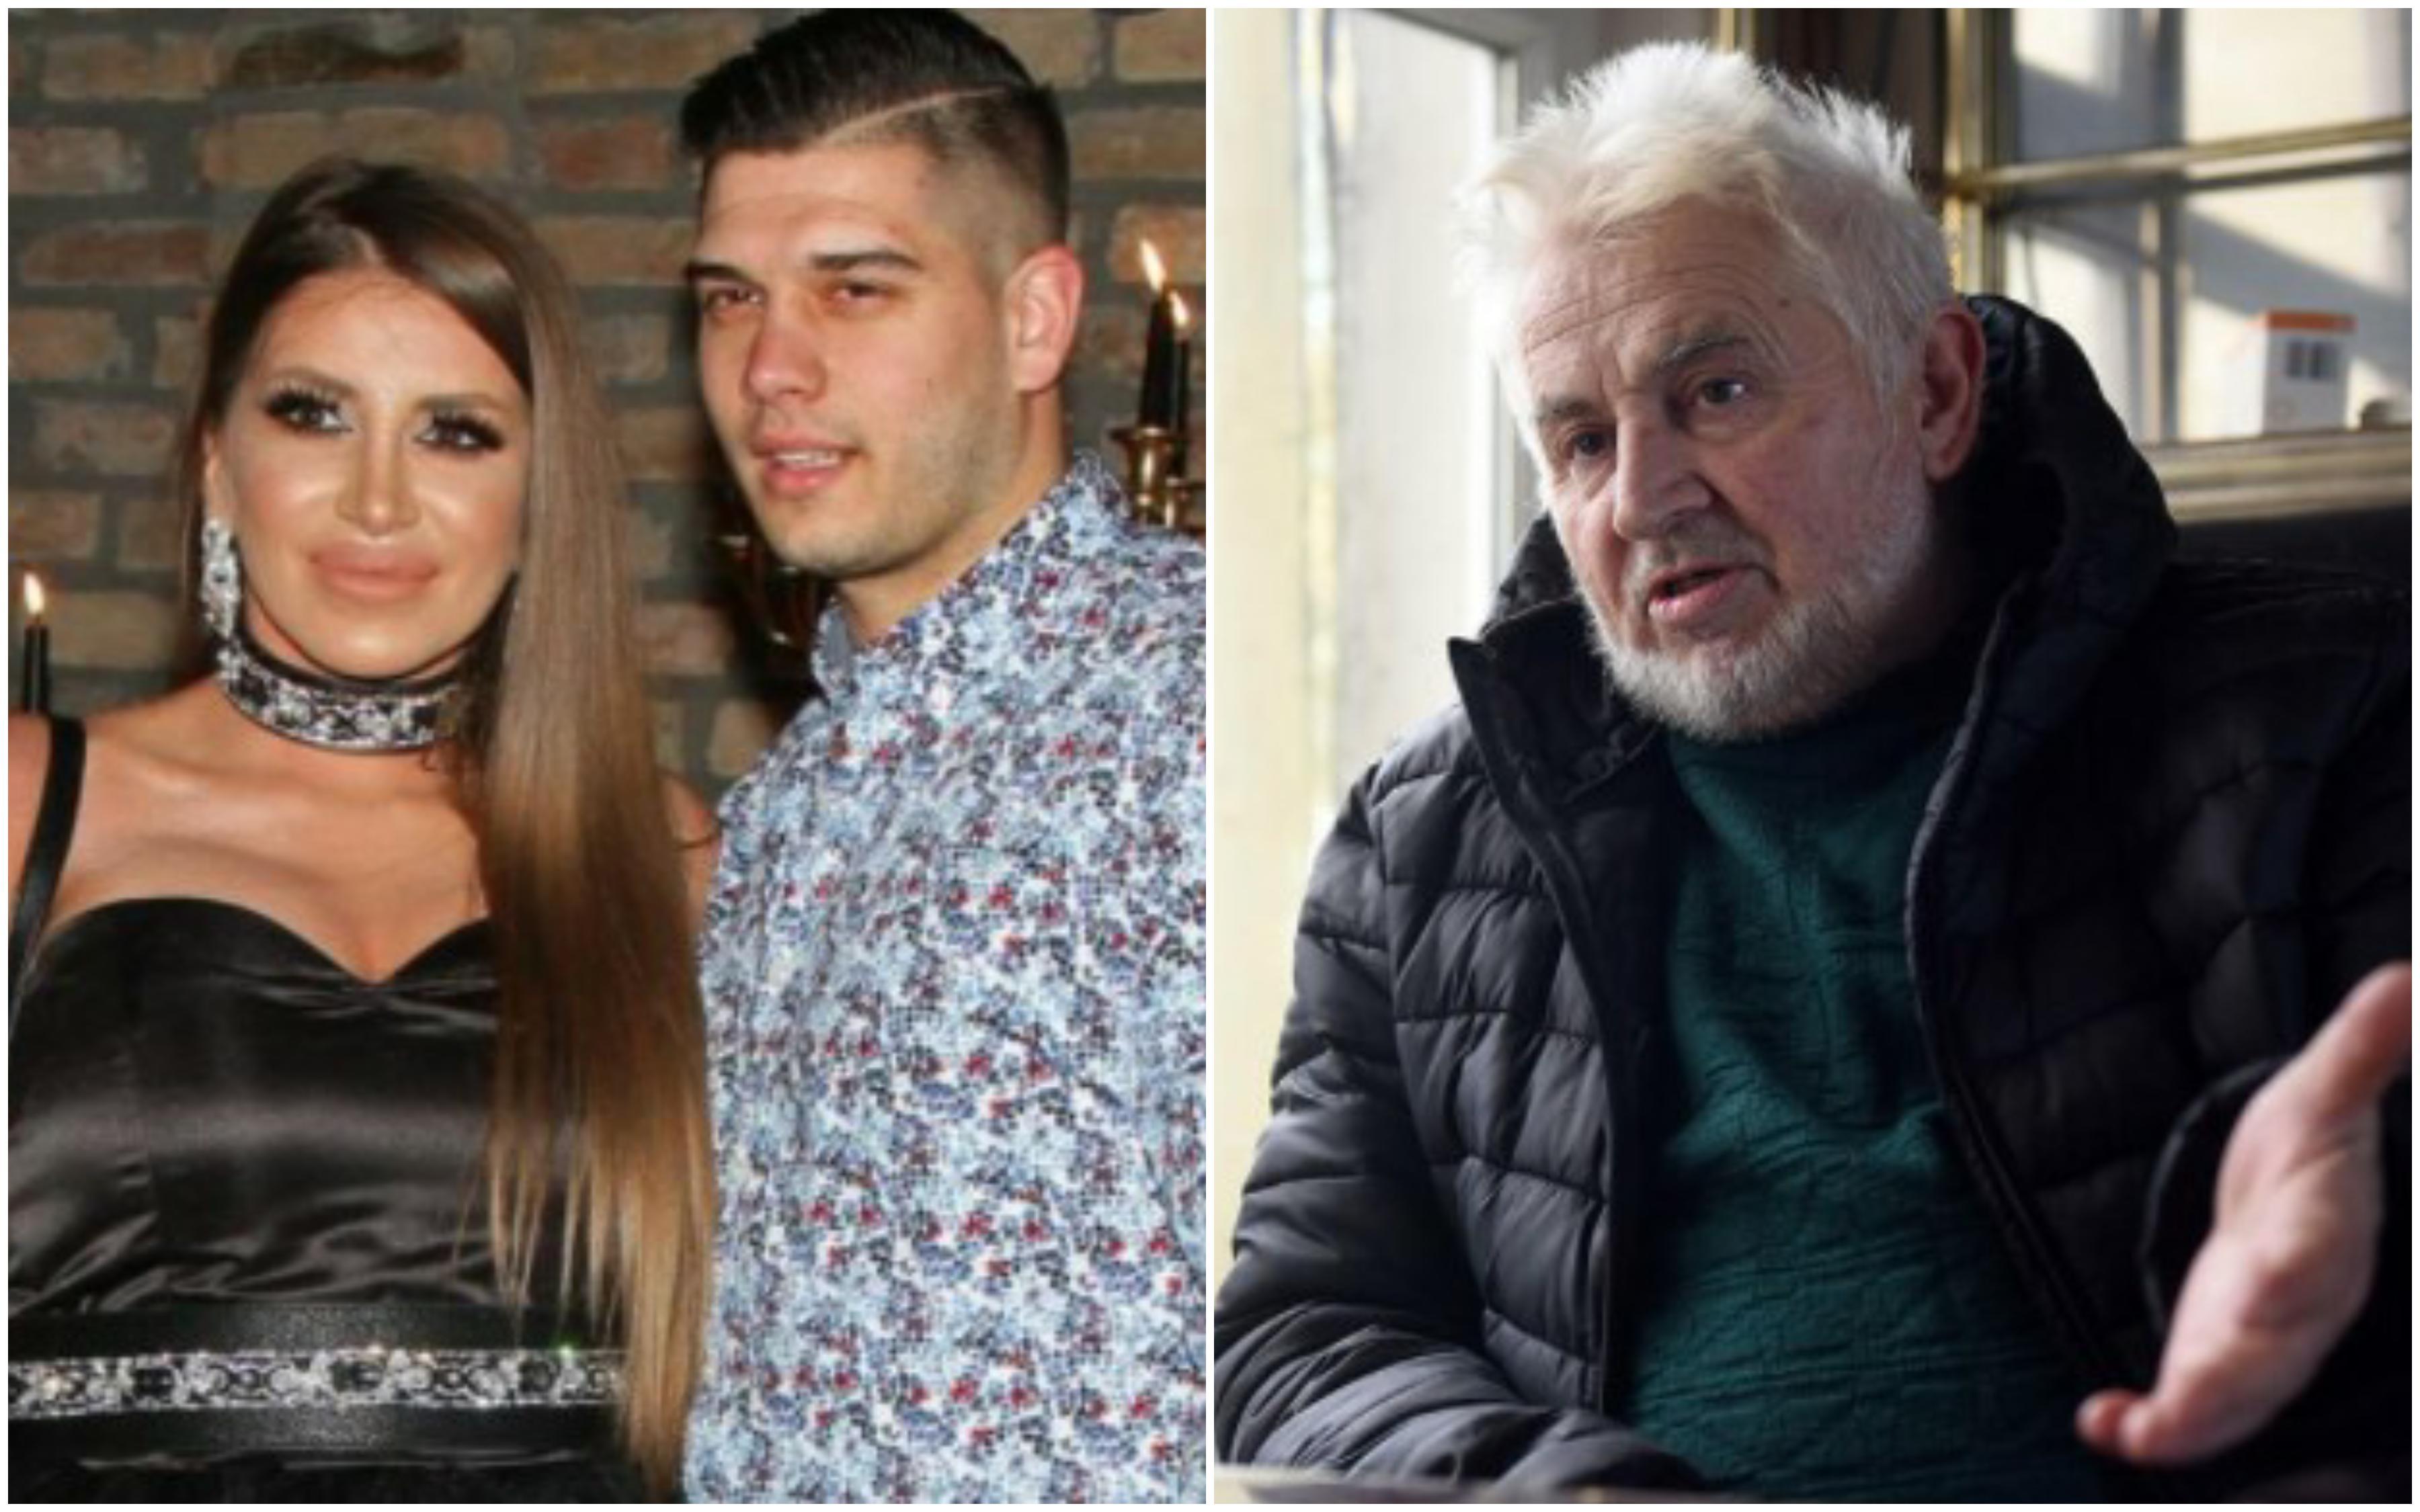 Otac Dalile Dragojević opet očajan nakon što je napala Dejana: "Pred mužem spava s drugim, sramota me to i da komentarišem"